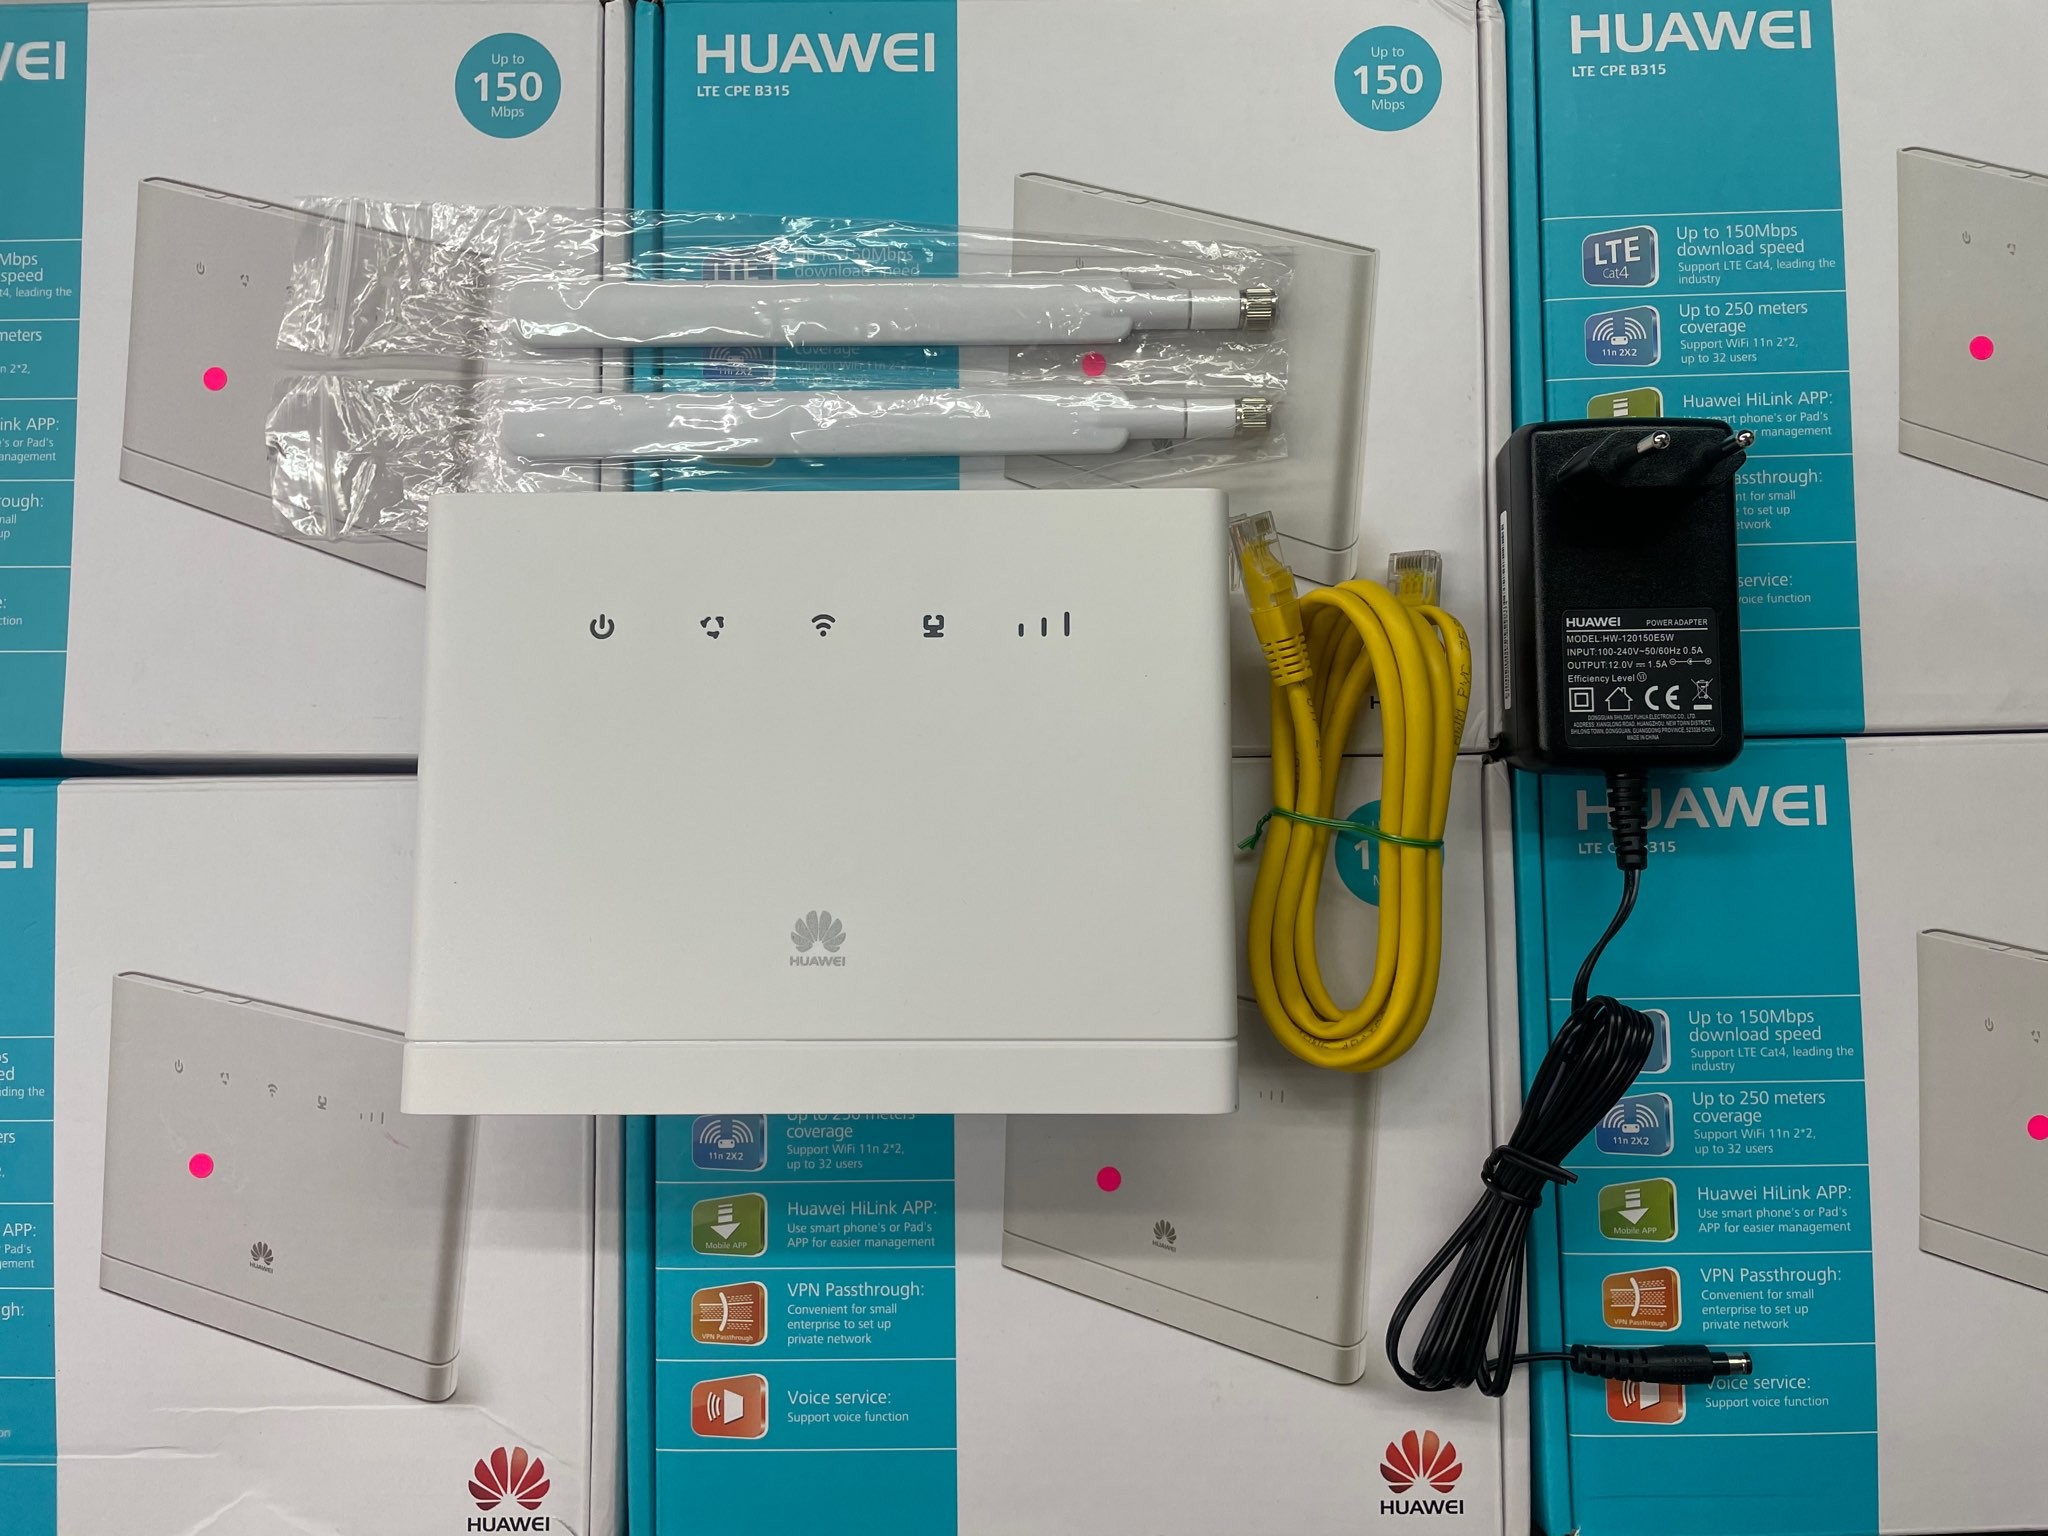 Huawei B315 LTE Wireless Gateway Modem Router